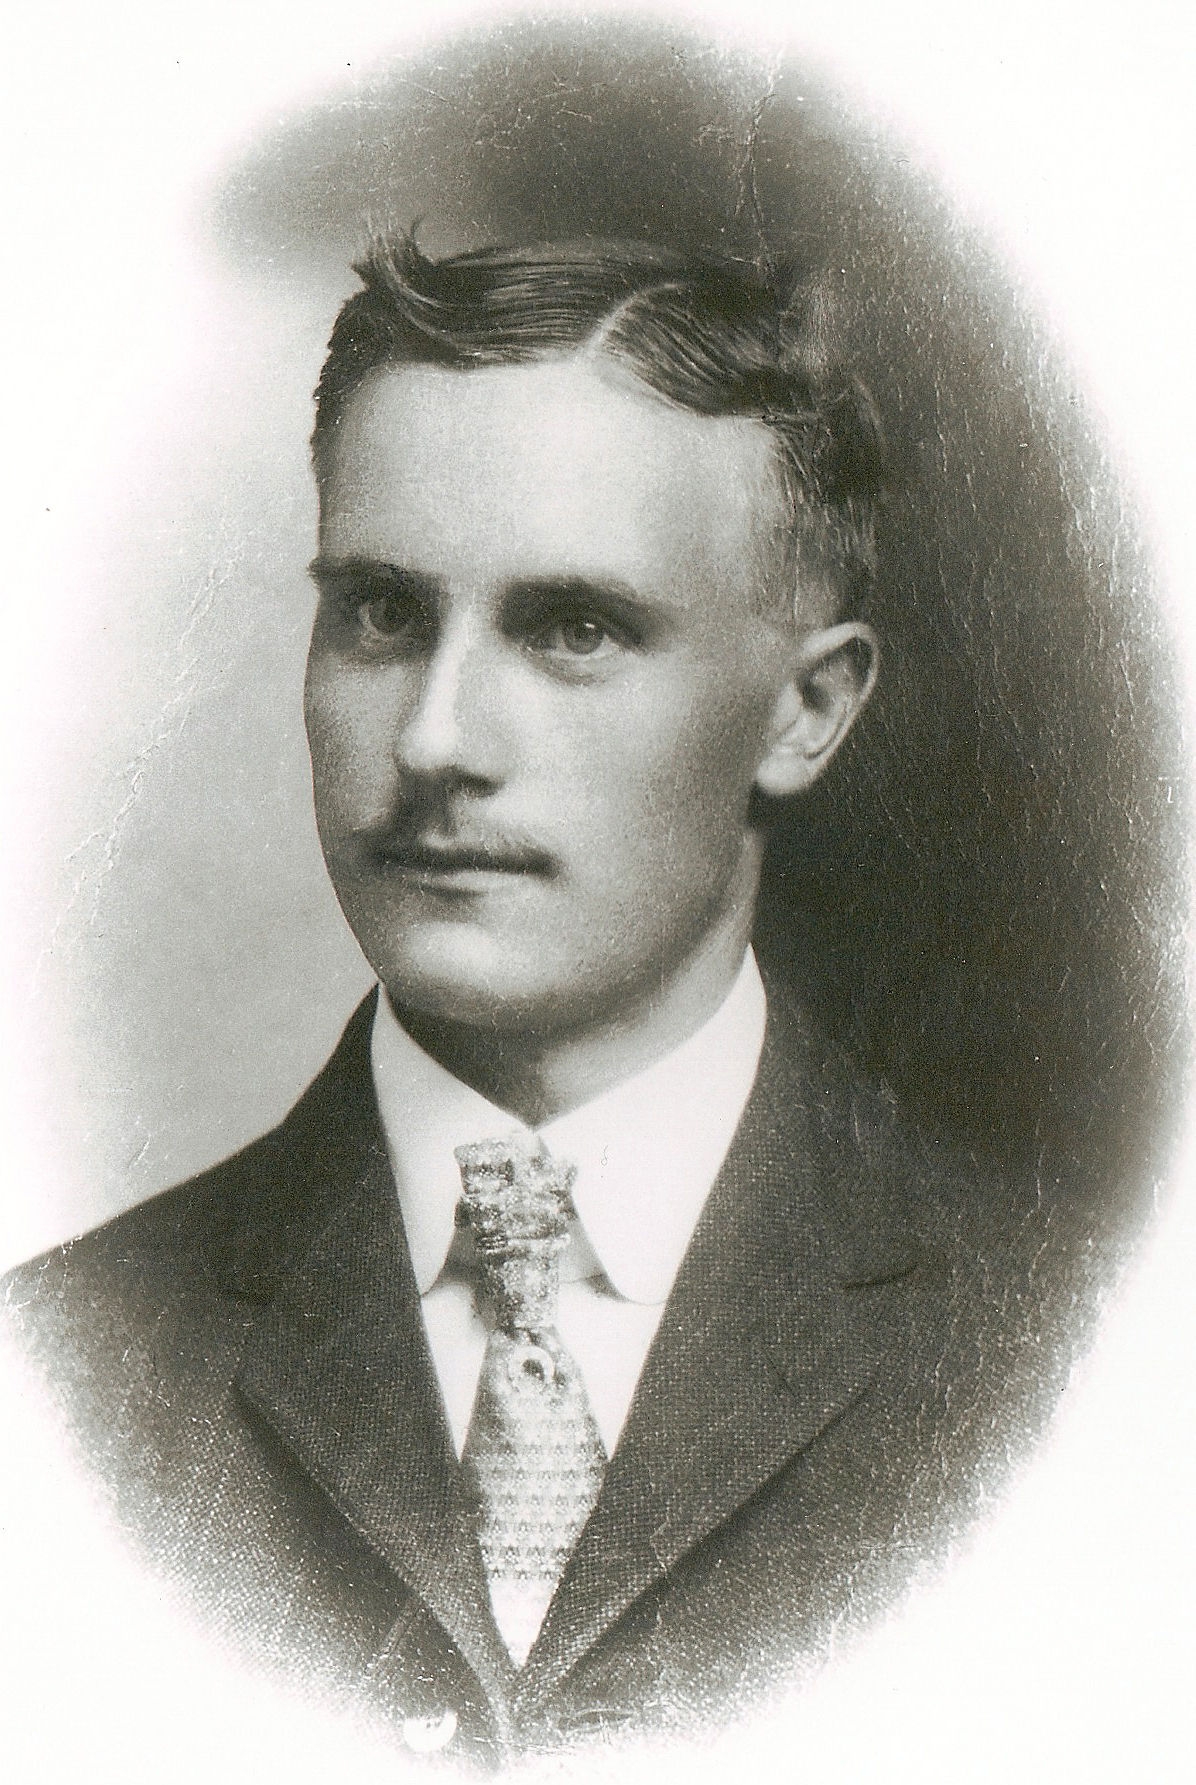 Conrad Olsen